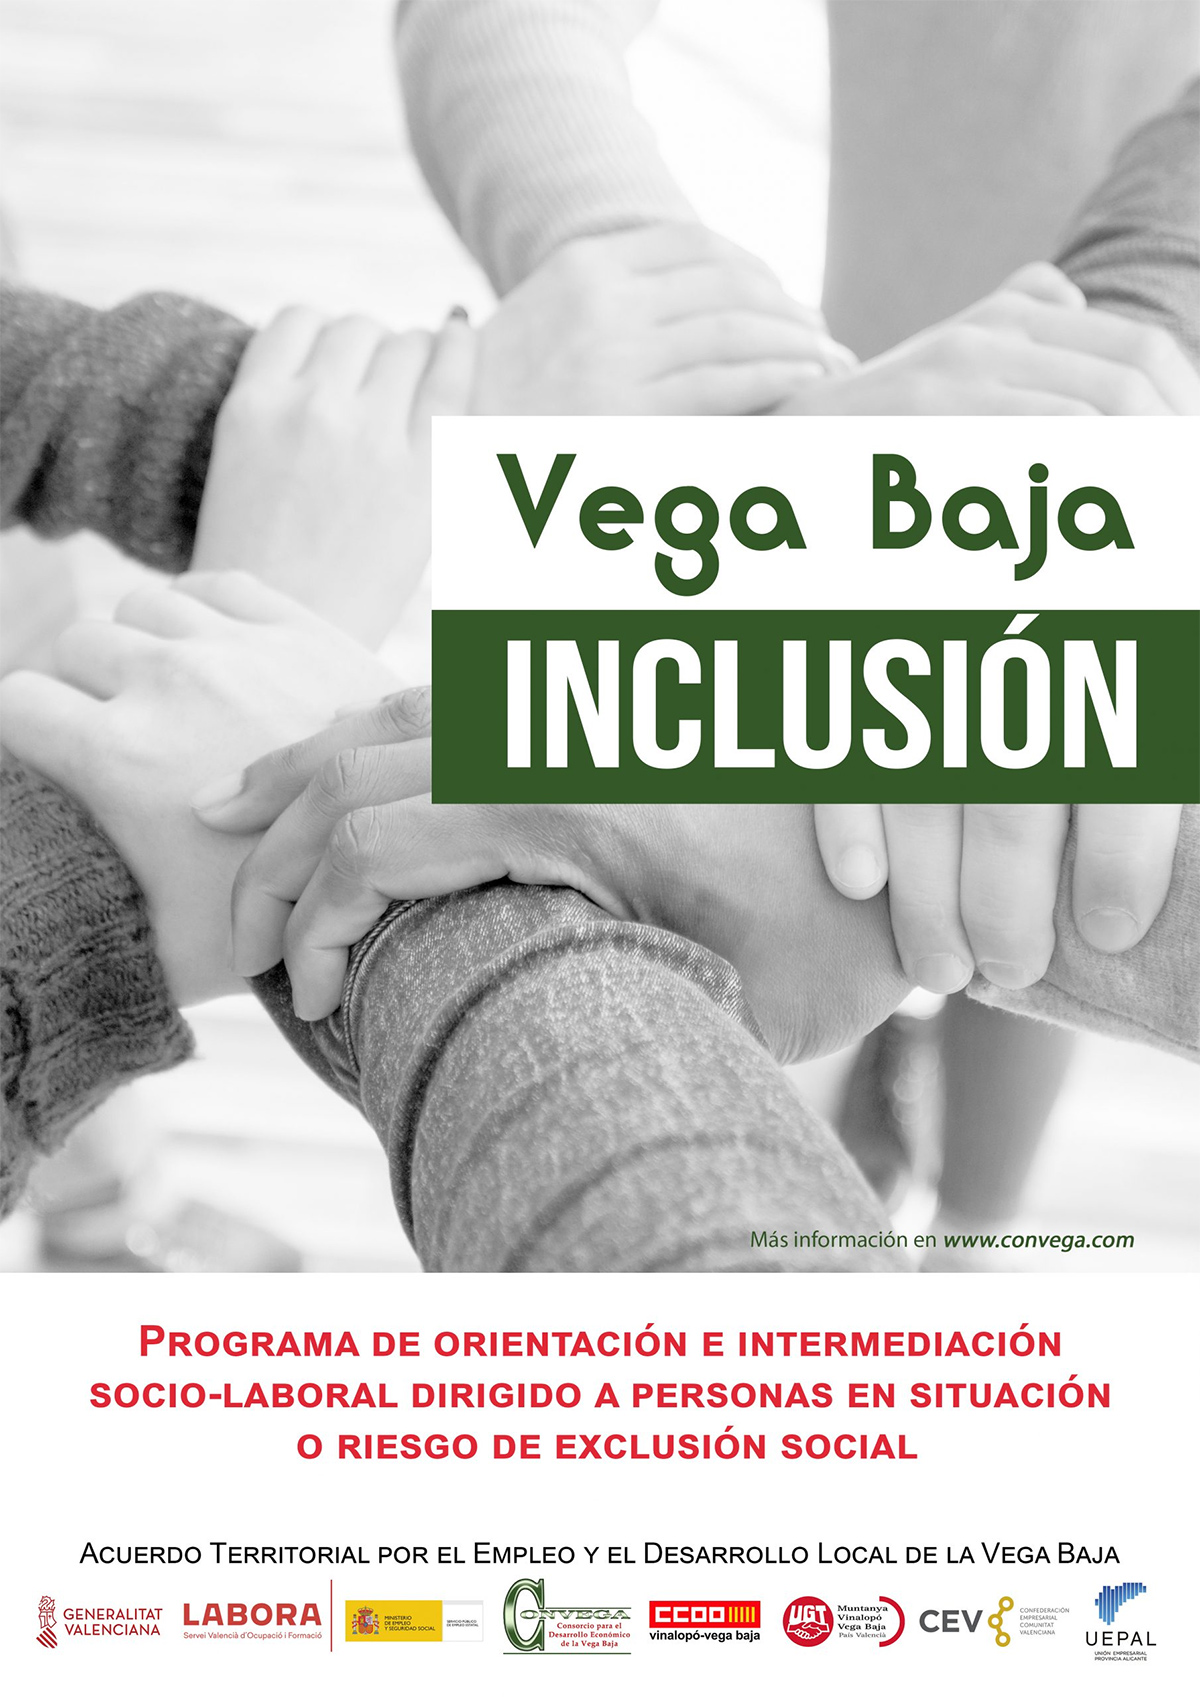 Vega Baja inclusión